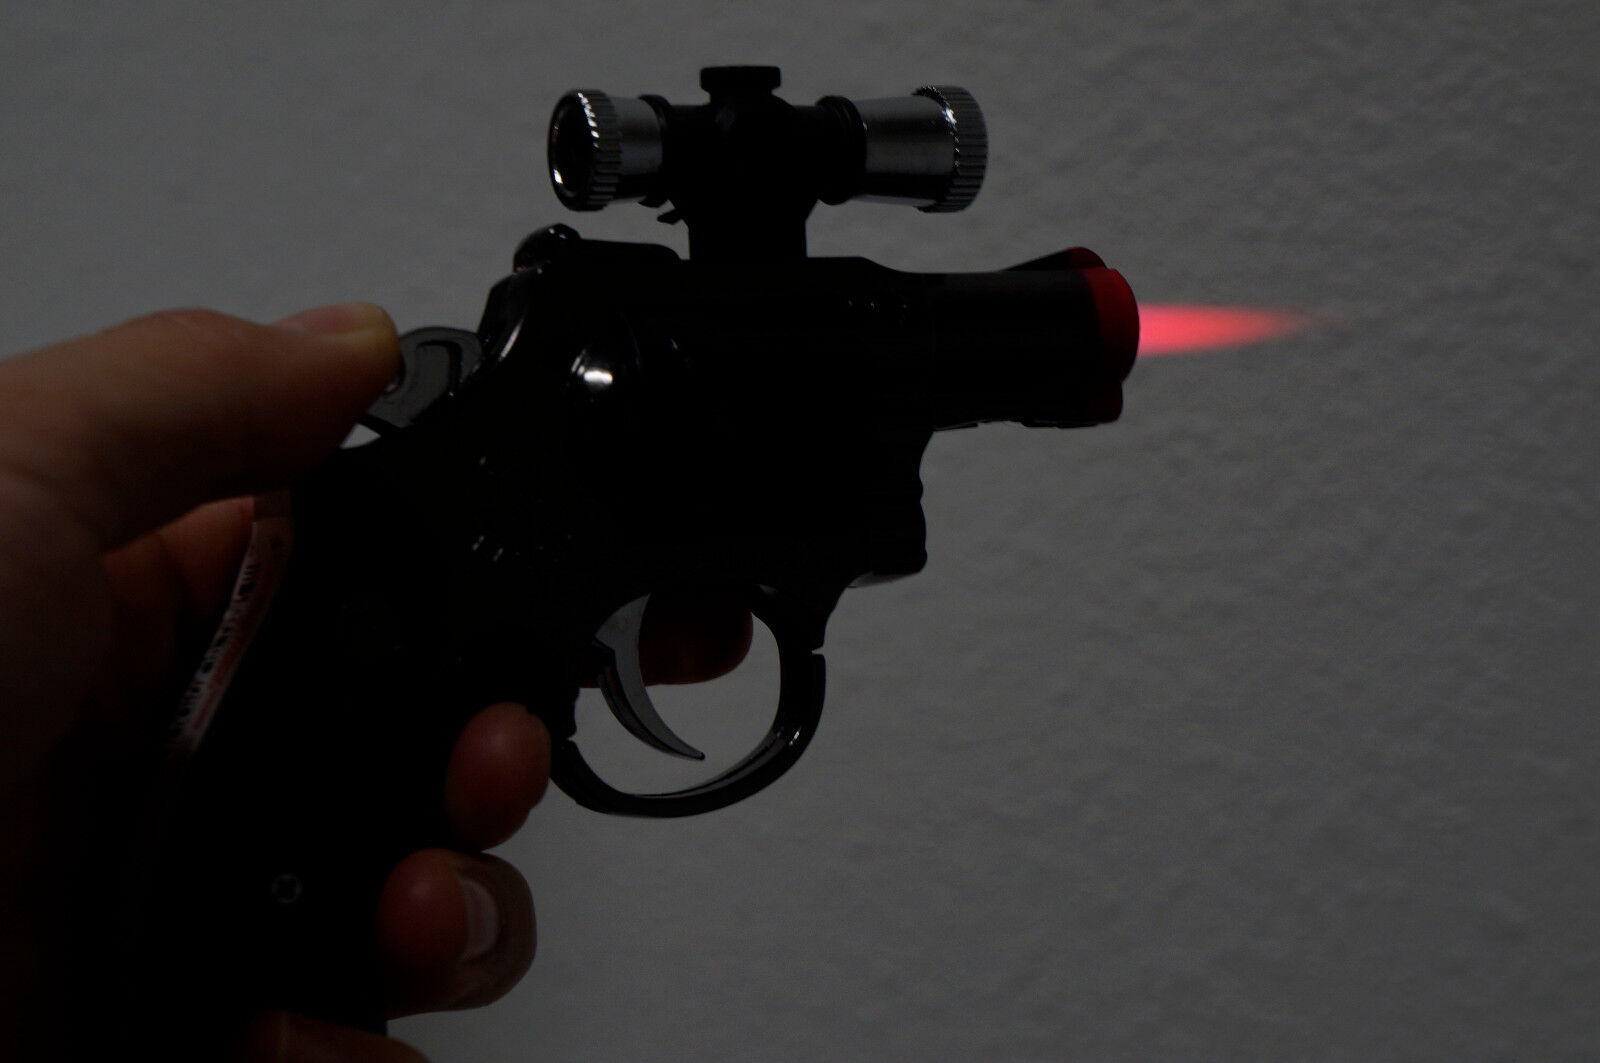 2 PACK 357 Magnum Gun Revolver Shaped Jet Torch Lighter with USA Legal Red Laser